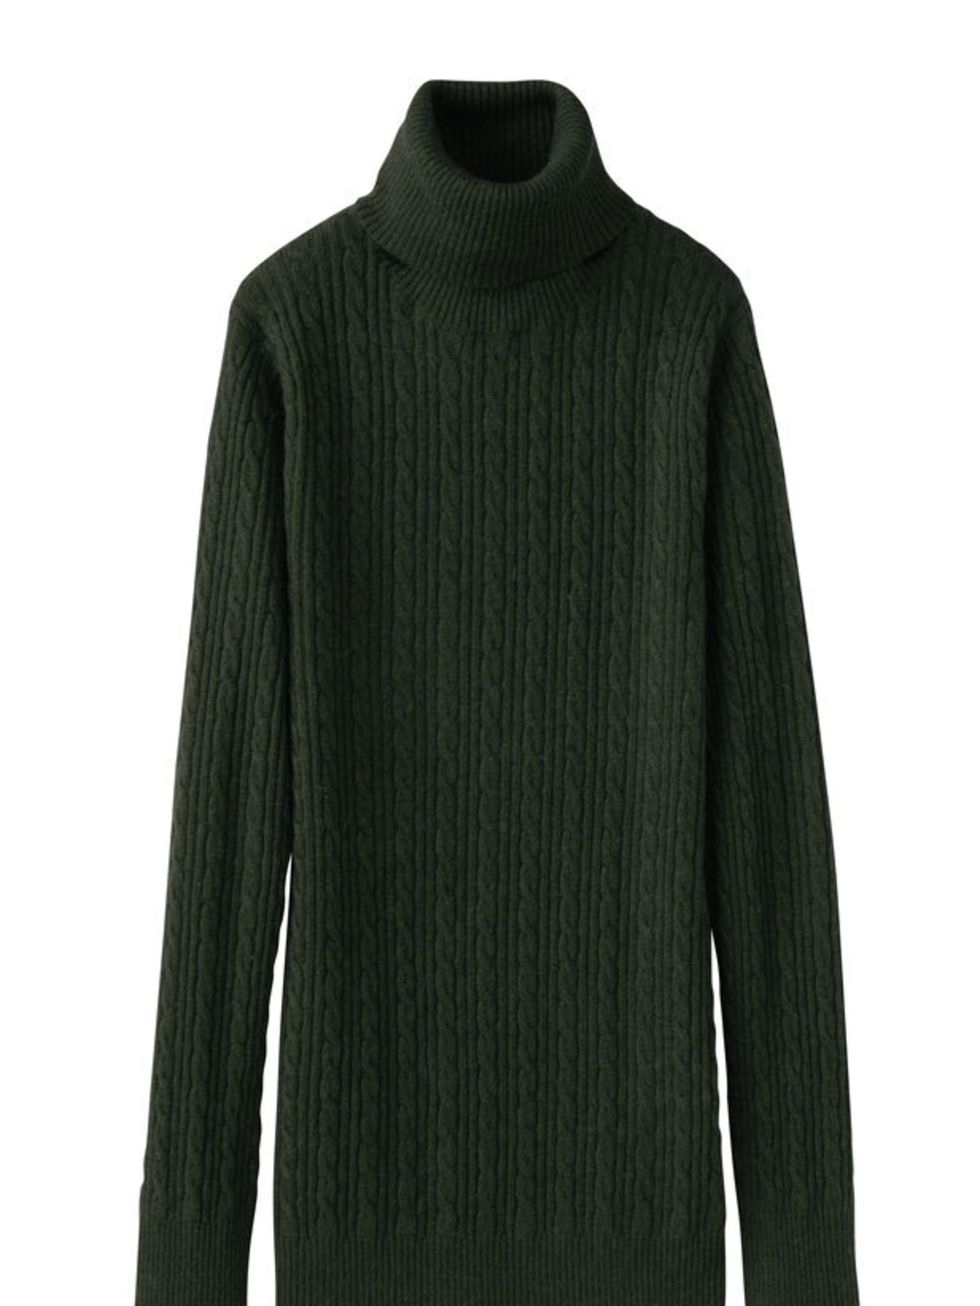 <p><a href="http://shop.uniqlo.com/uk/list/basic/women/tops/reknitwear">Uniqlo</a> cashmere roll neck jumper, £29.90</p>